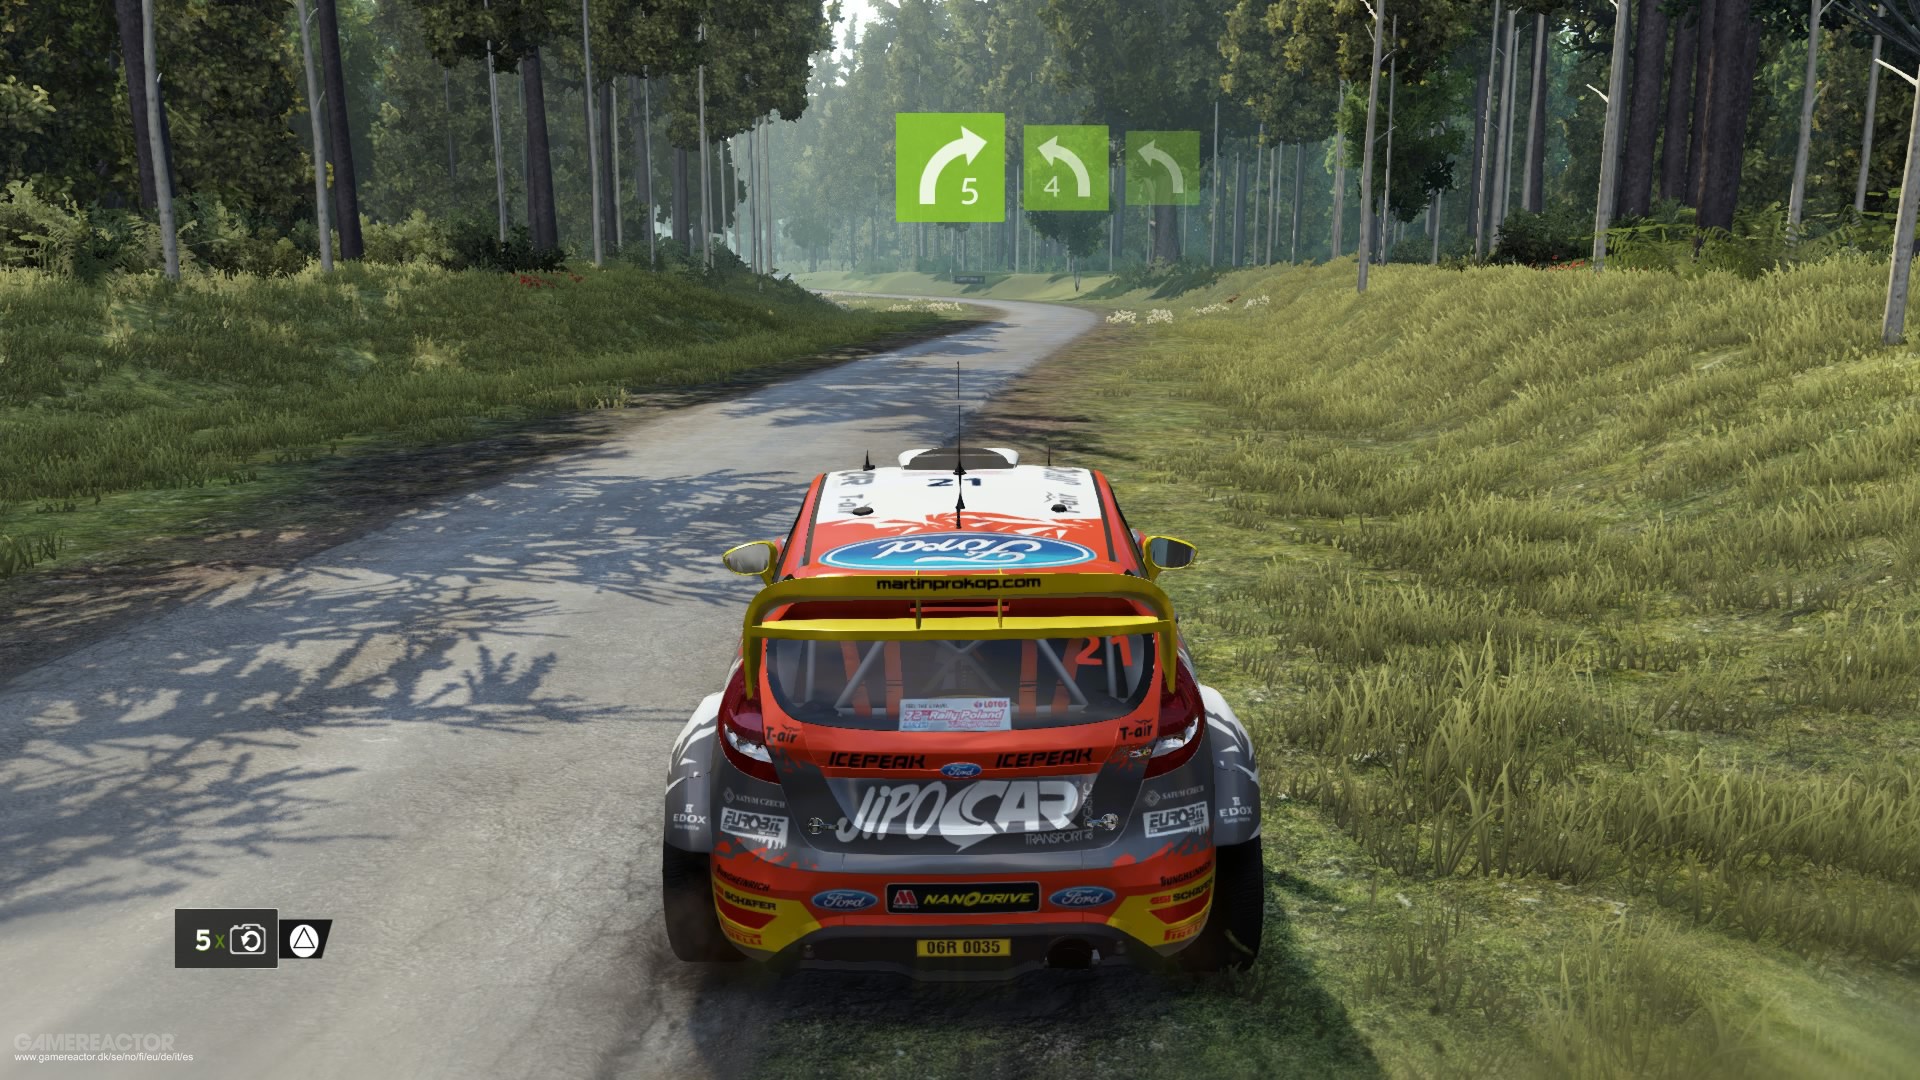 analyse inspanning Charles Keasing WRC 5 Review - Gamereactor